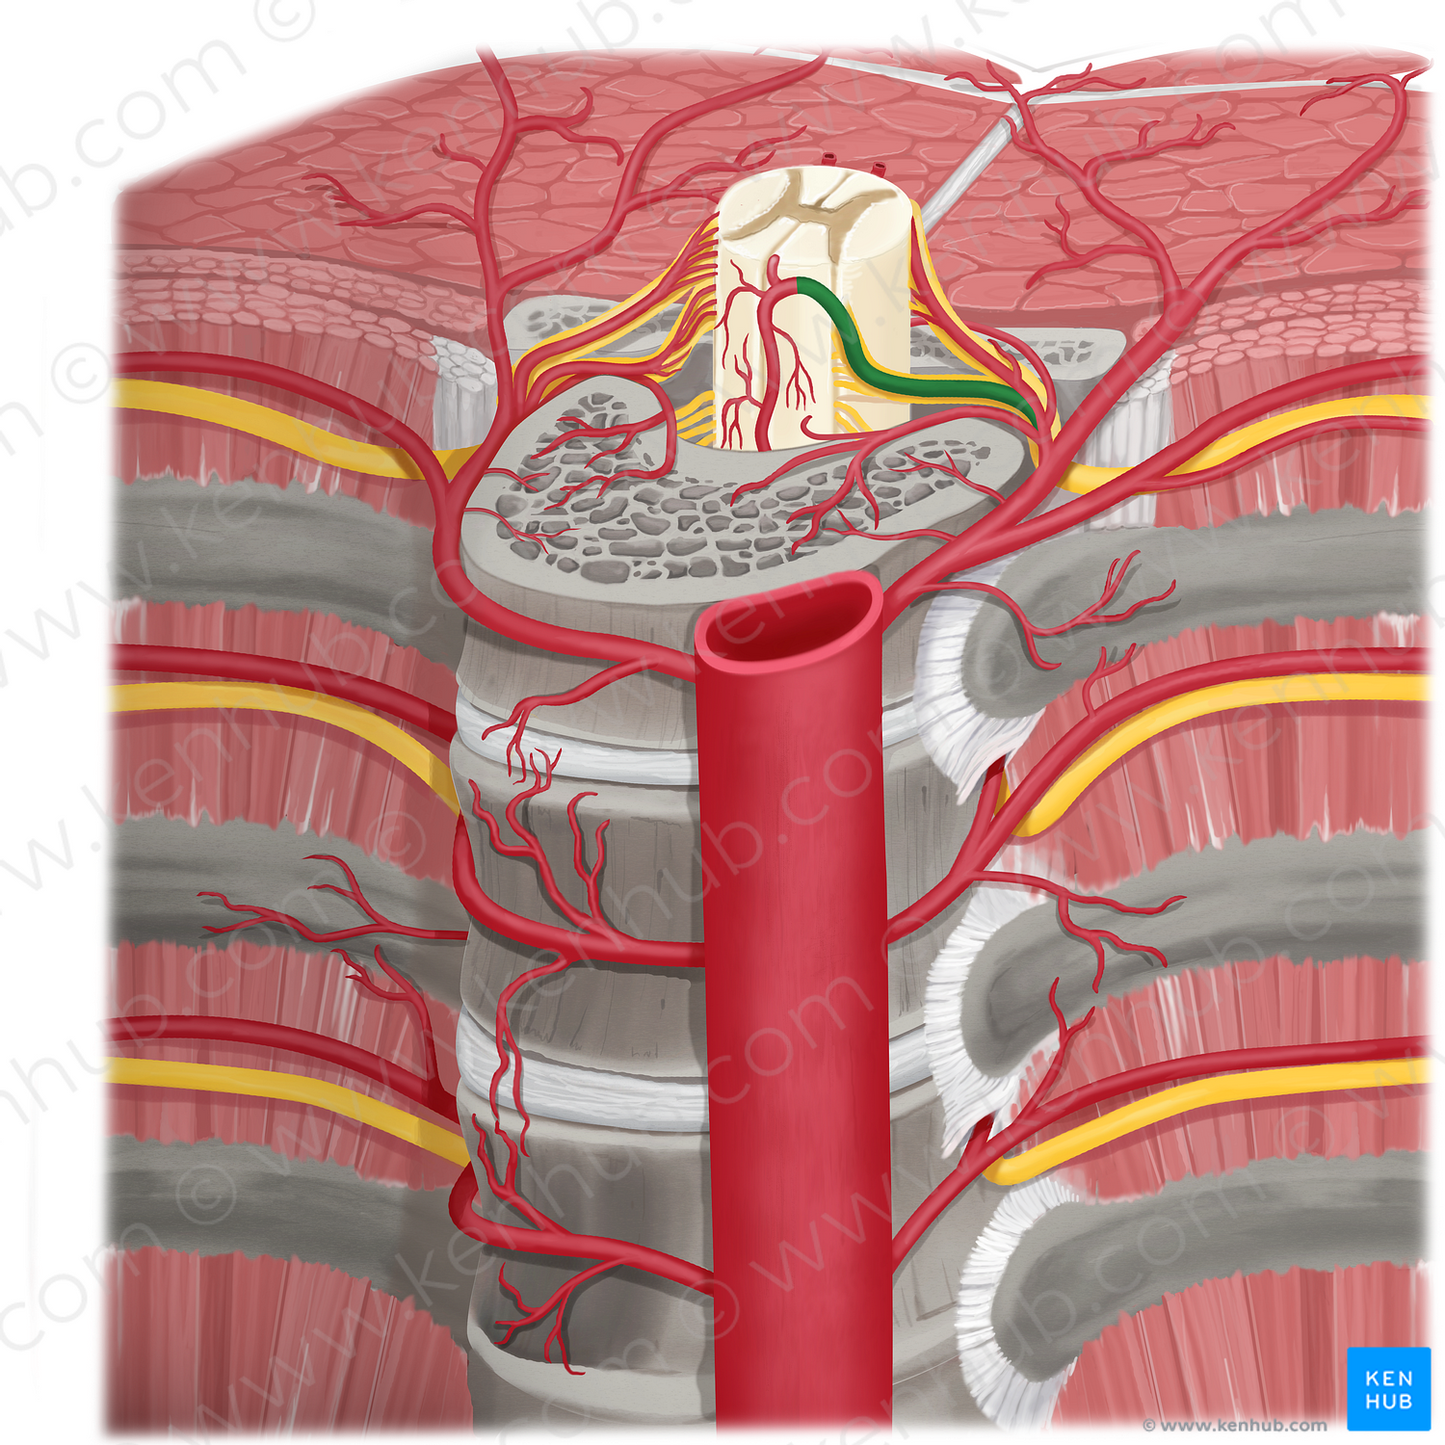 Anterior segmental medullary artery (#1503)